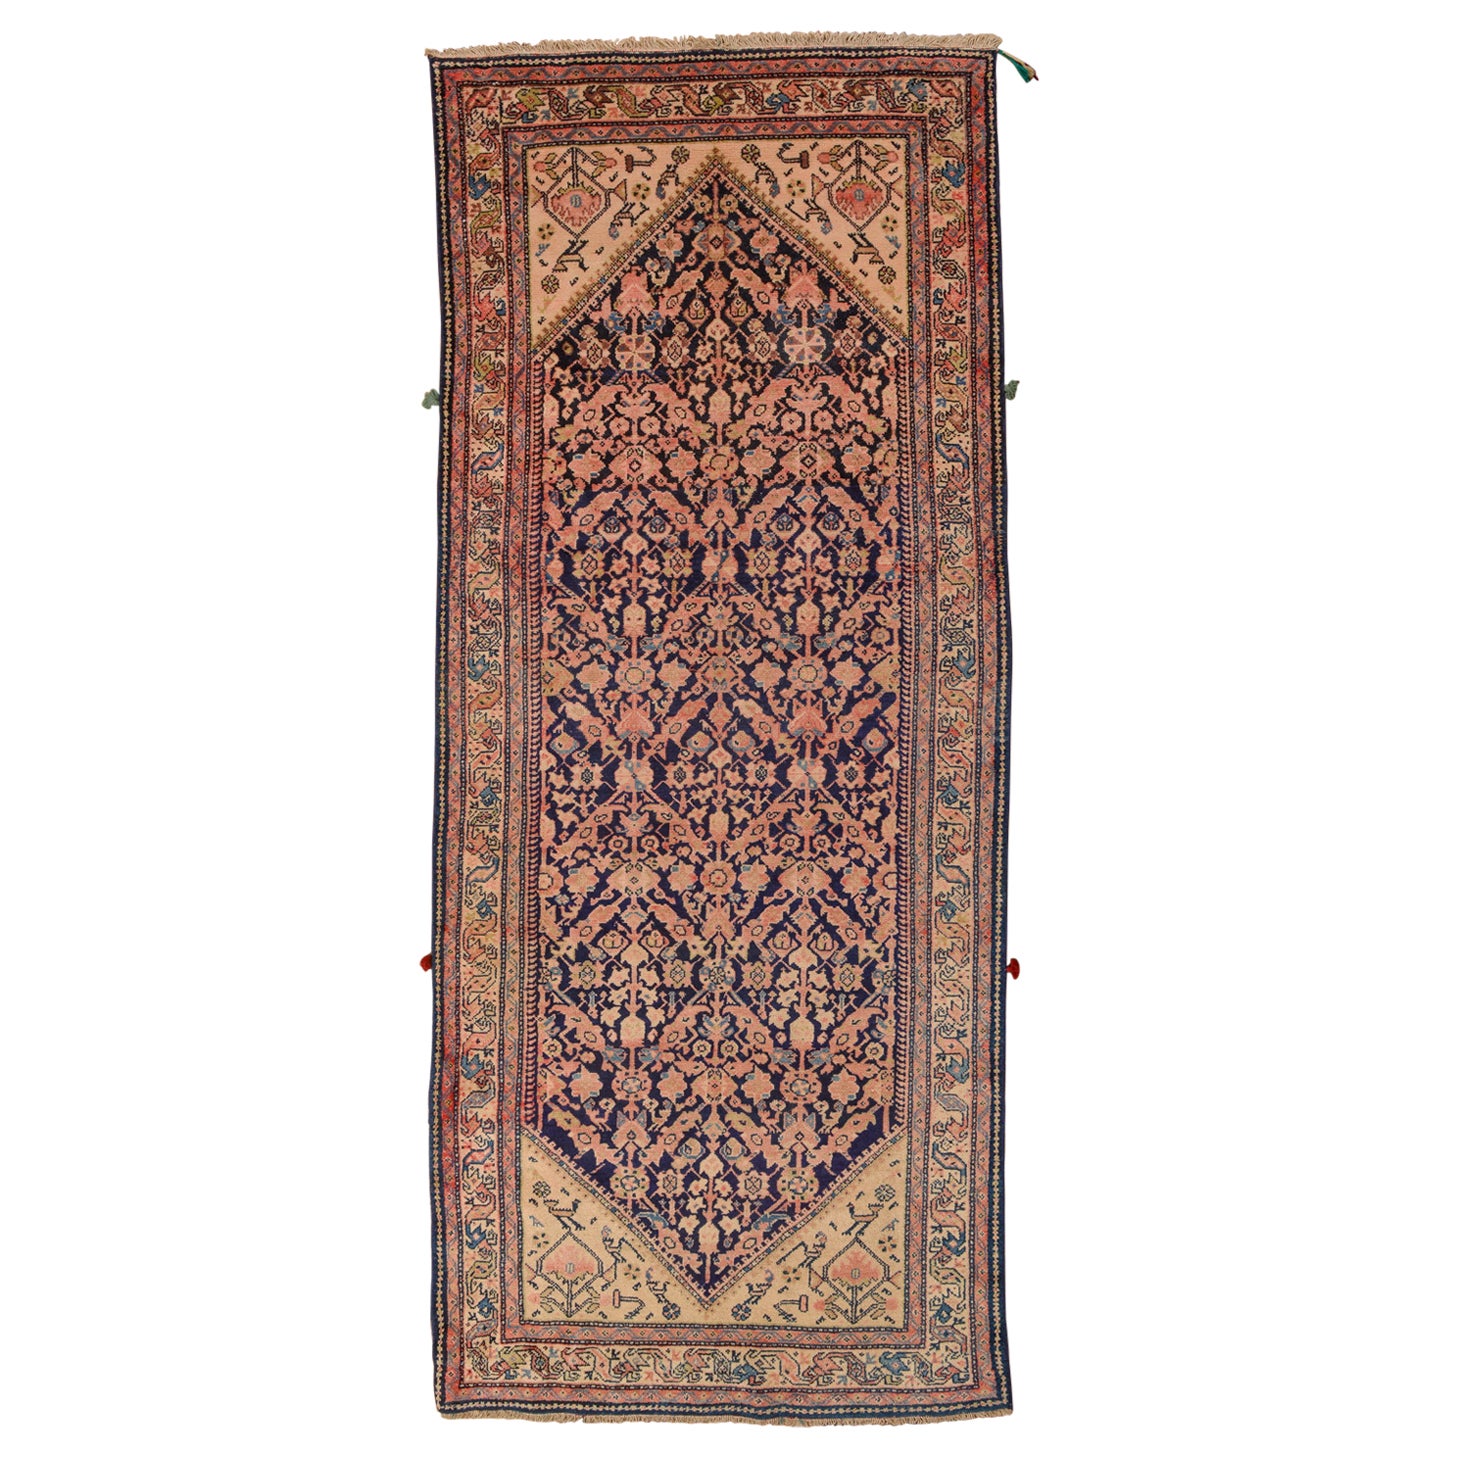 Kaukasischer Garebagh-Teppich oder Teppich